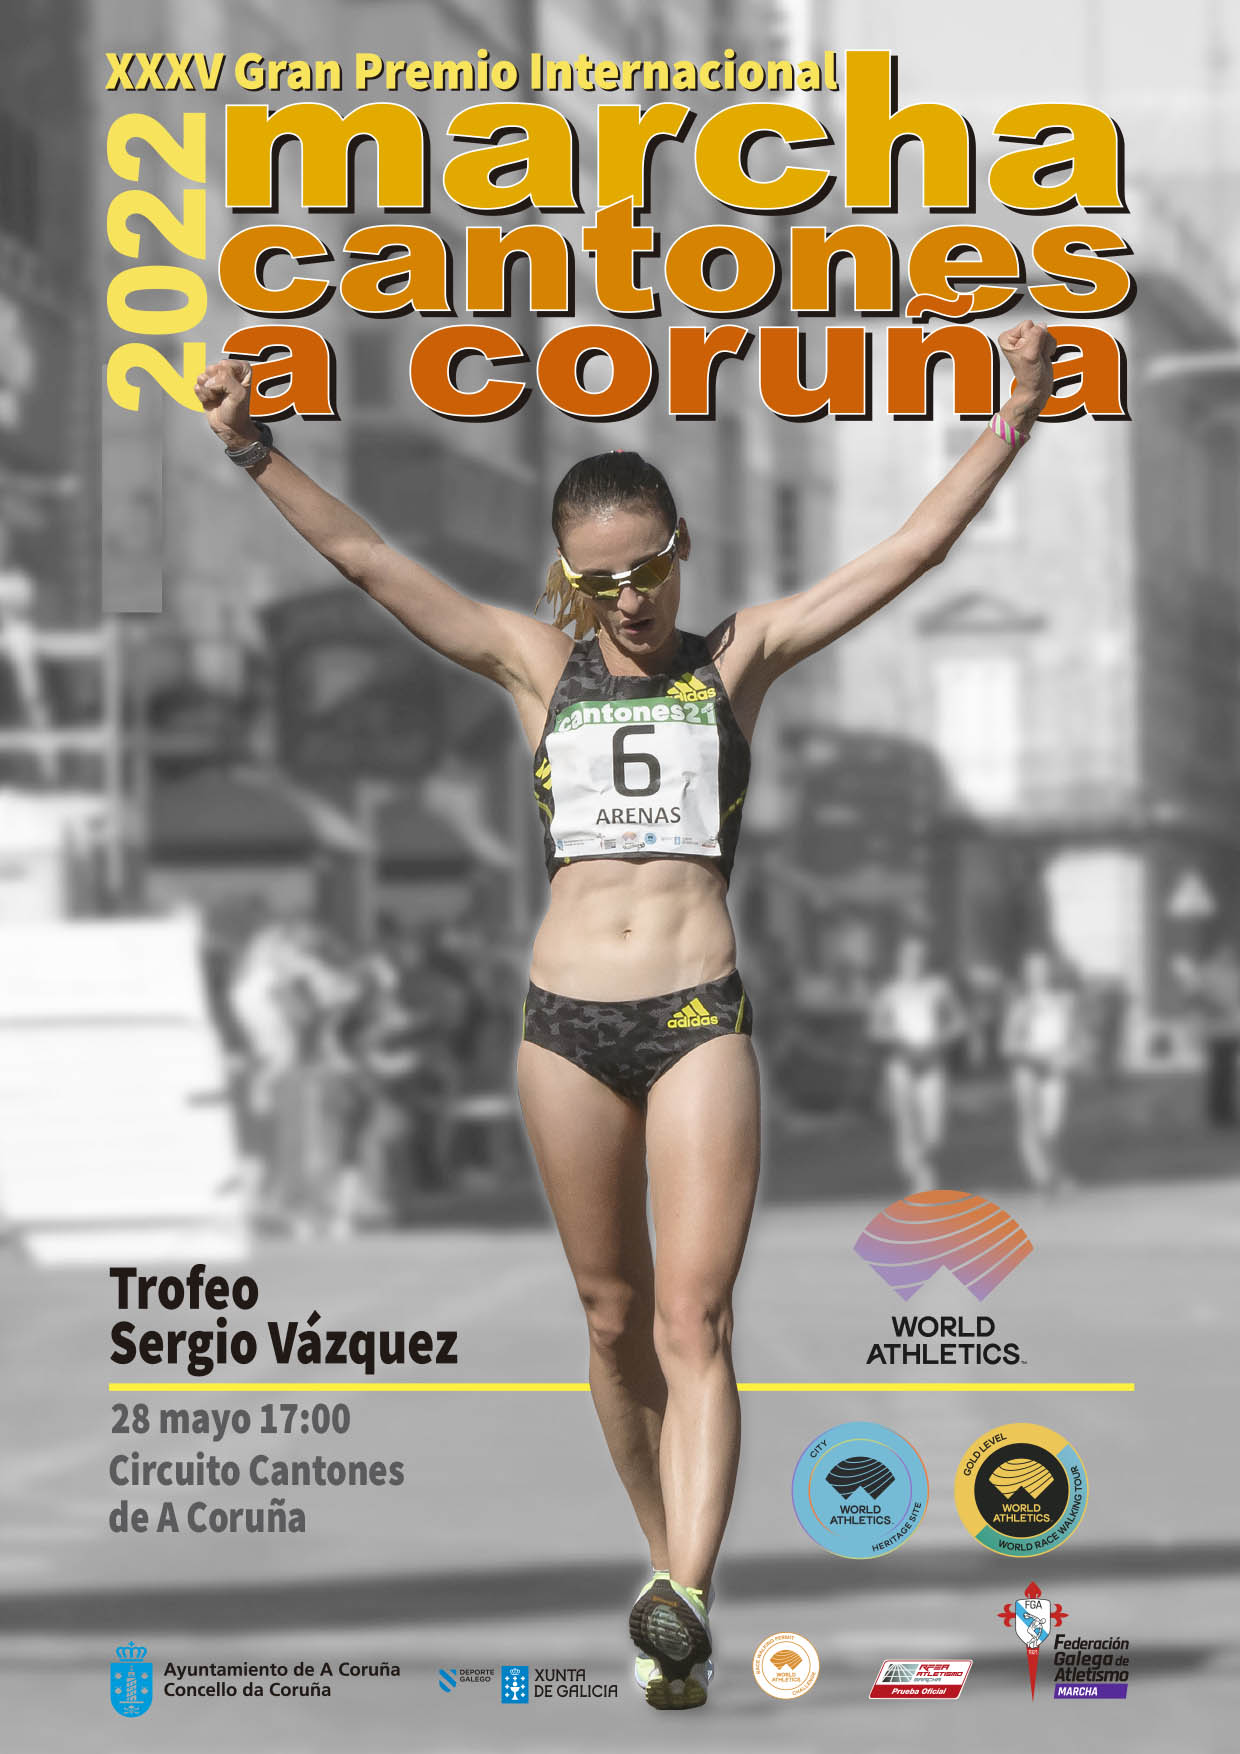 XXXV Gran Premio Internacional Cantones de A Coruña – Trofeo “Sergio Vazquez”